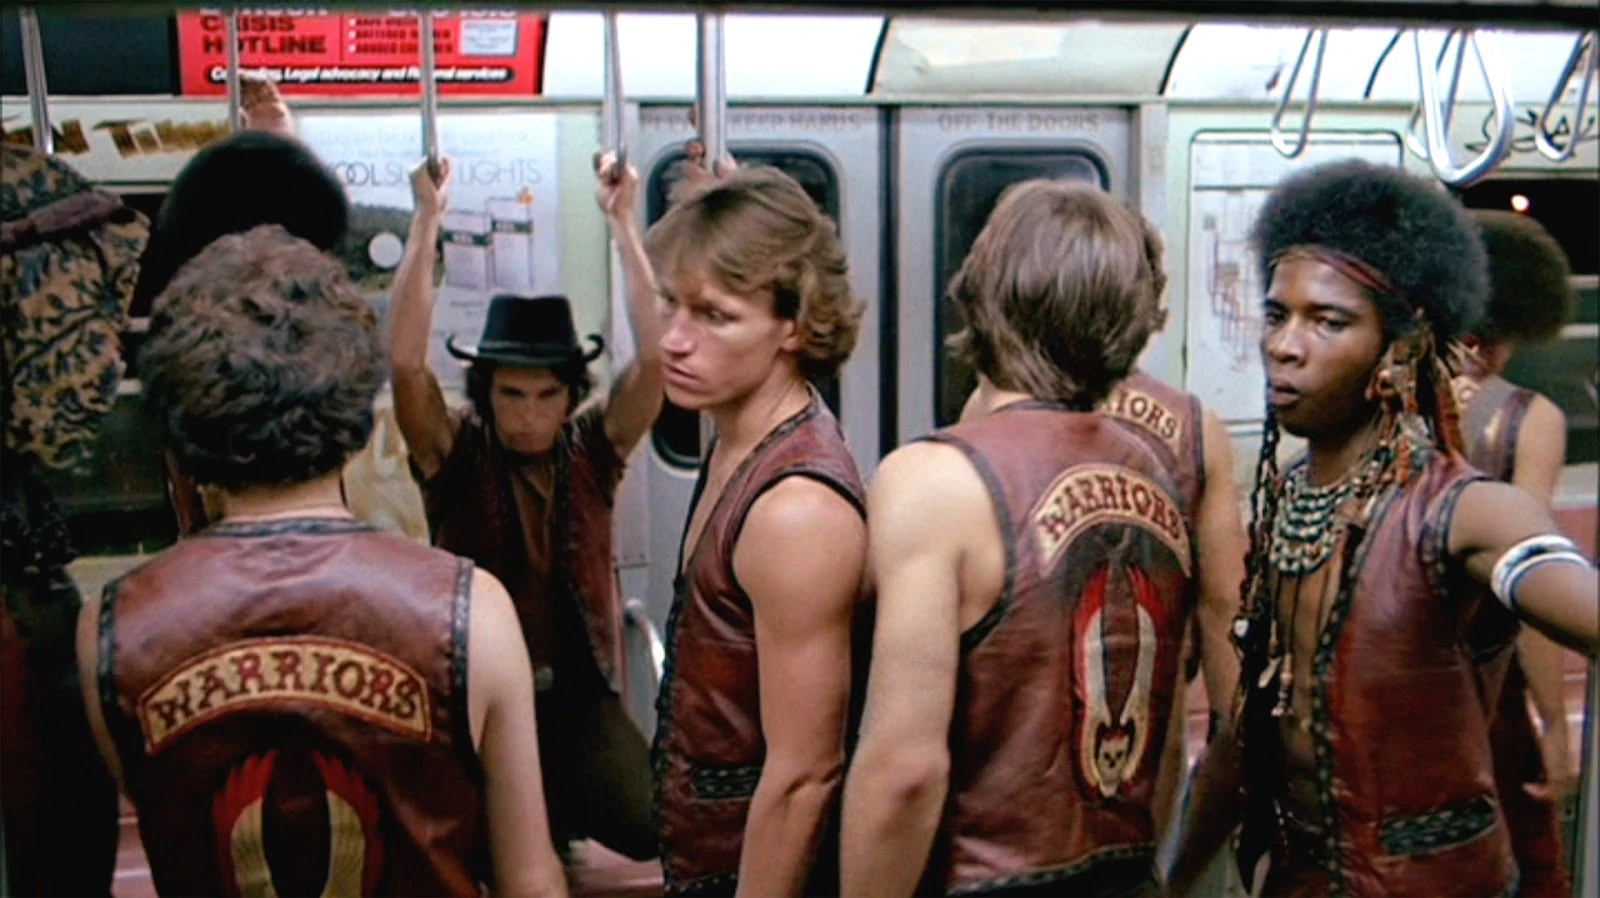 The Warriors on NYC subway train